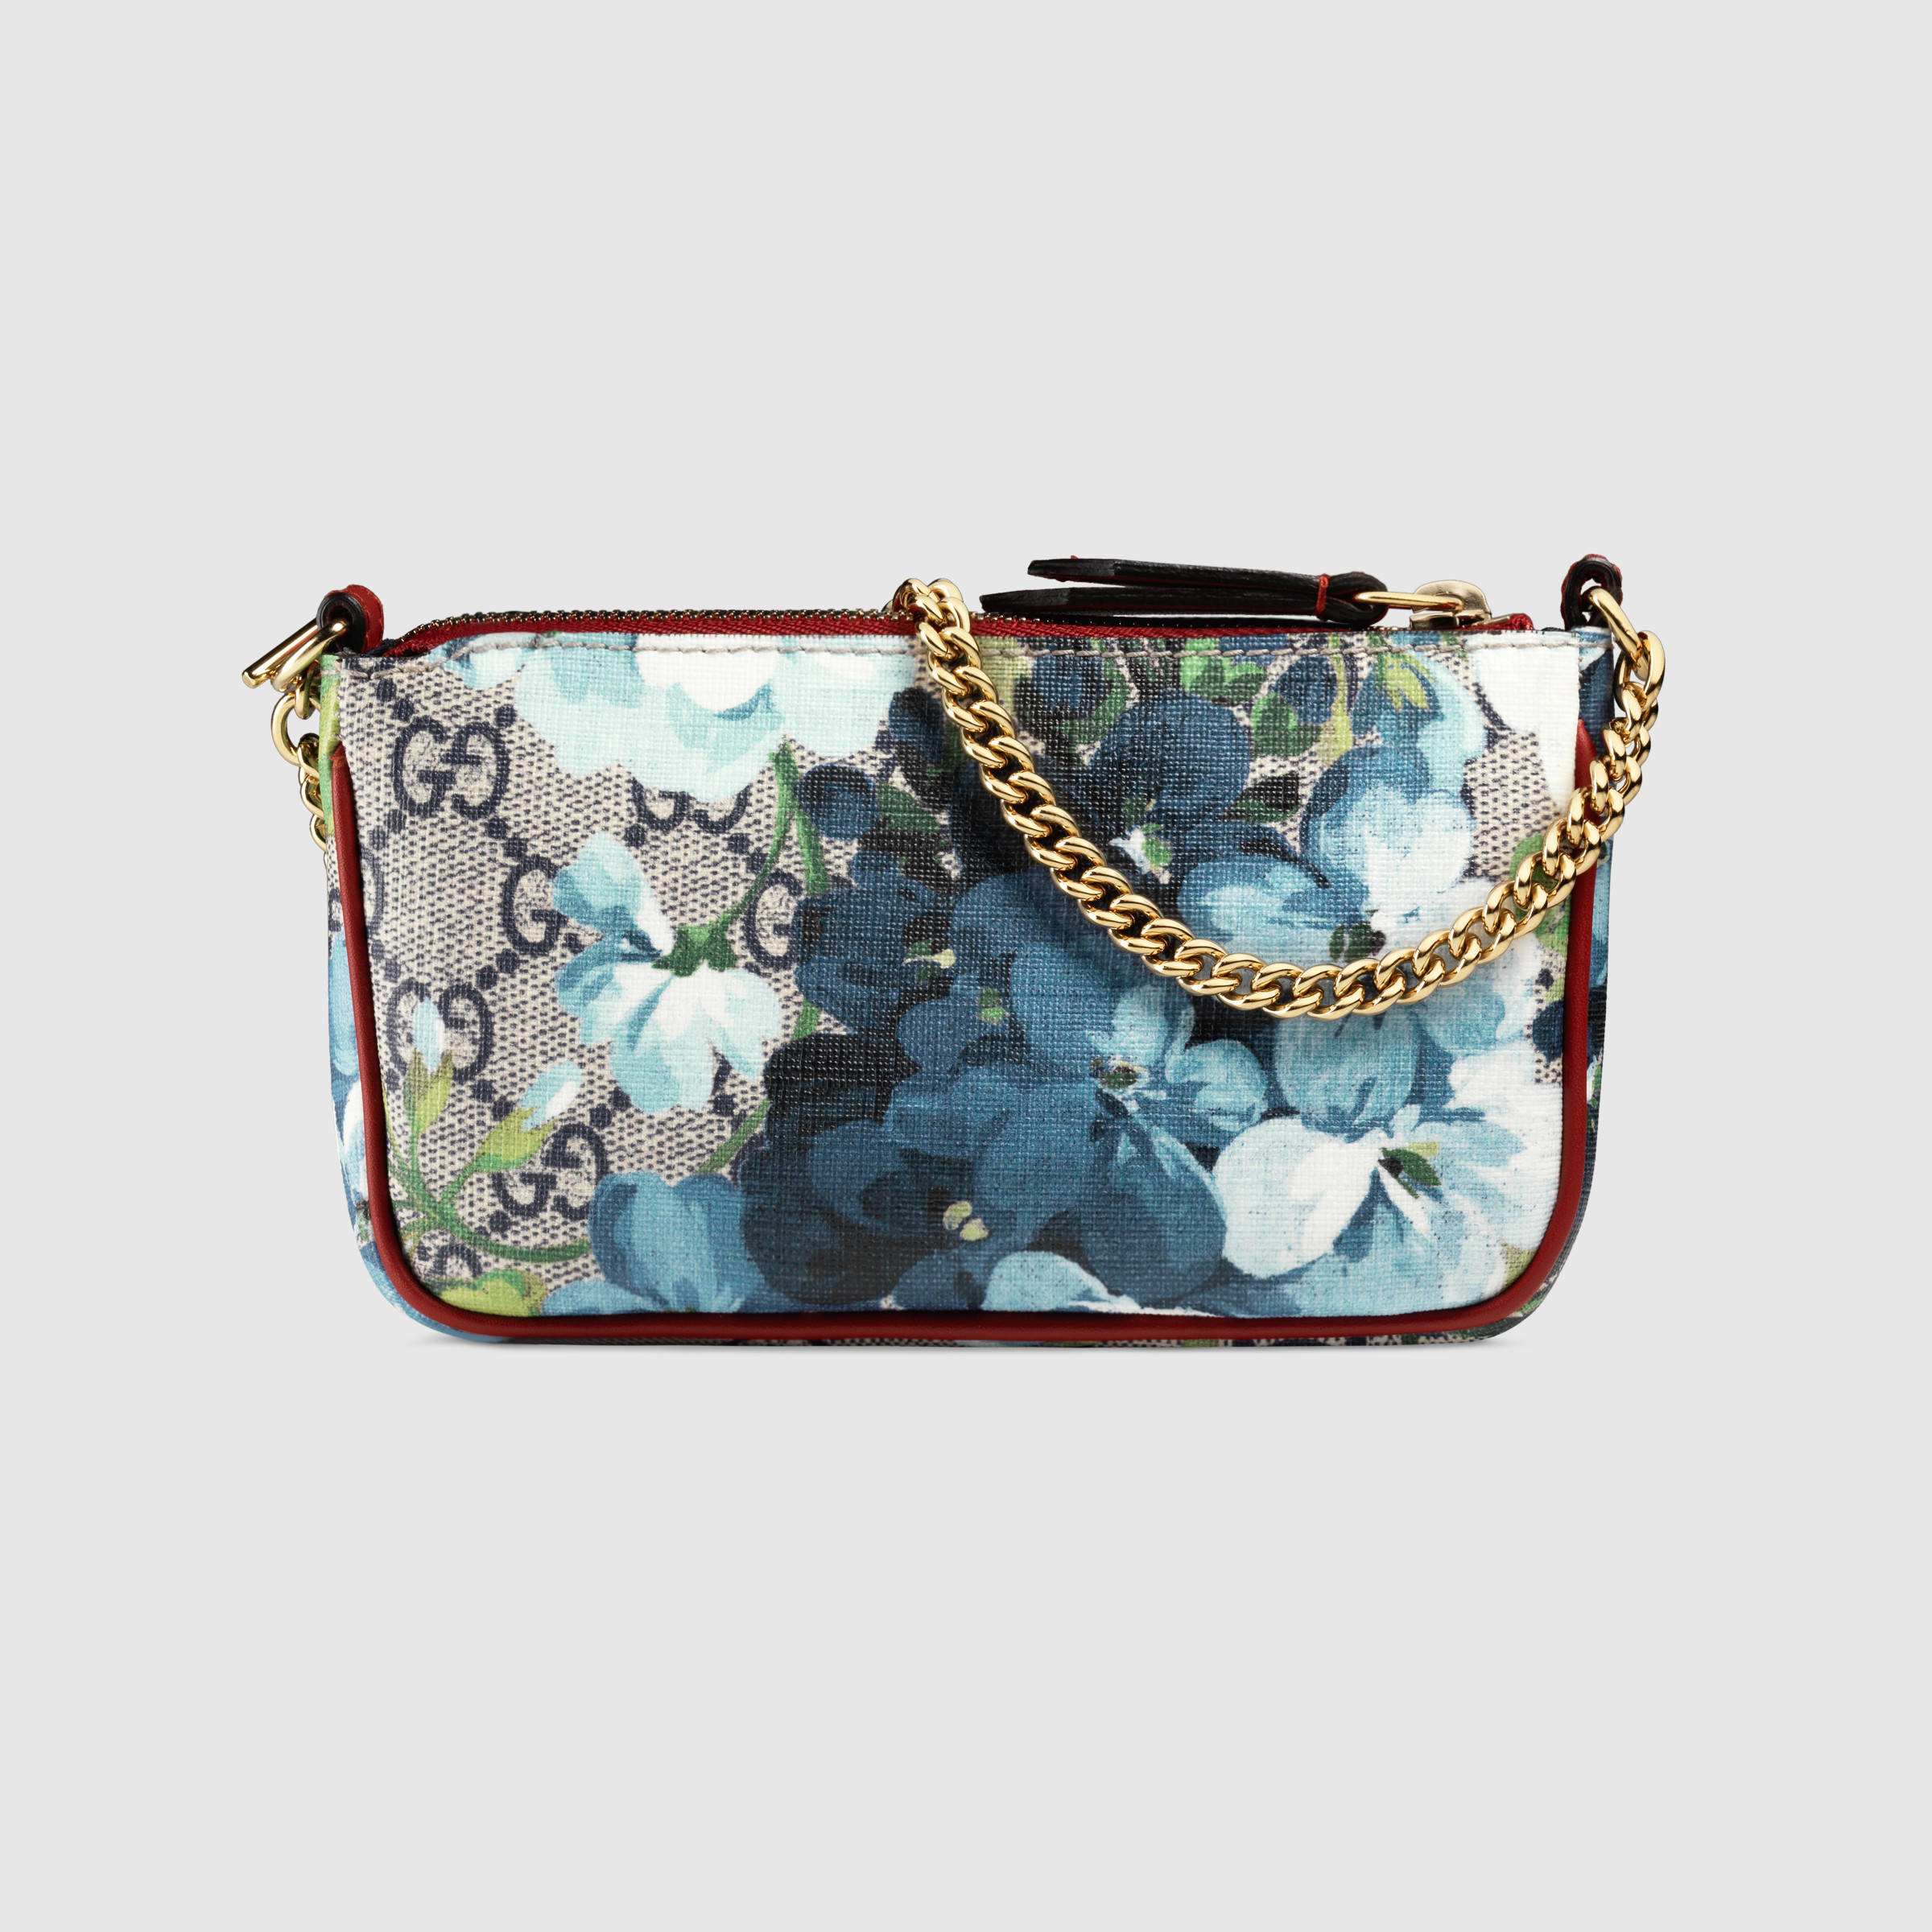 Lyst - Gucci Gg Blooms Mini Chain Bag in Blue